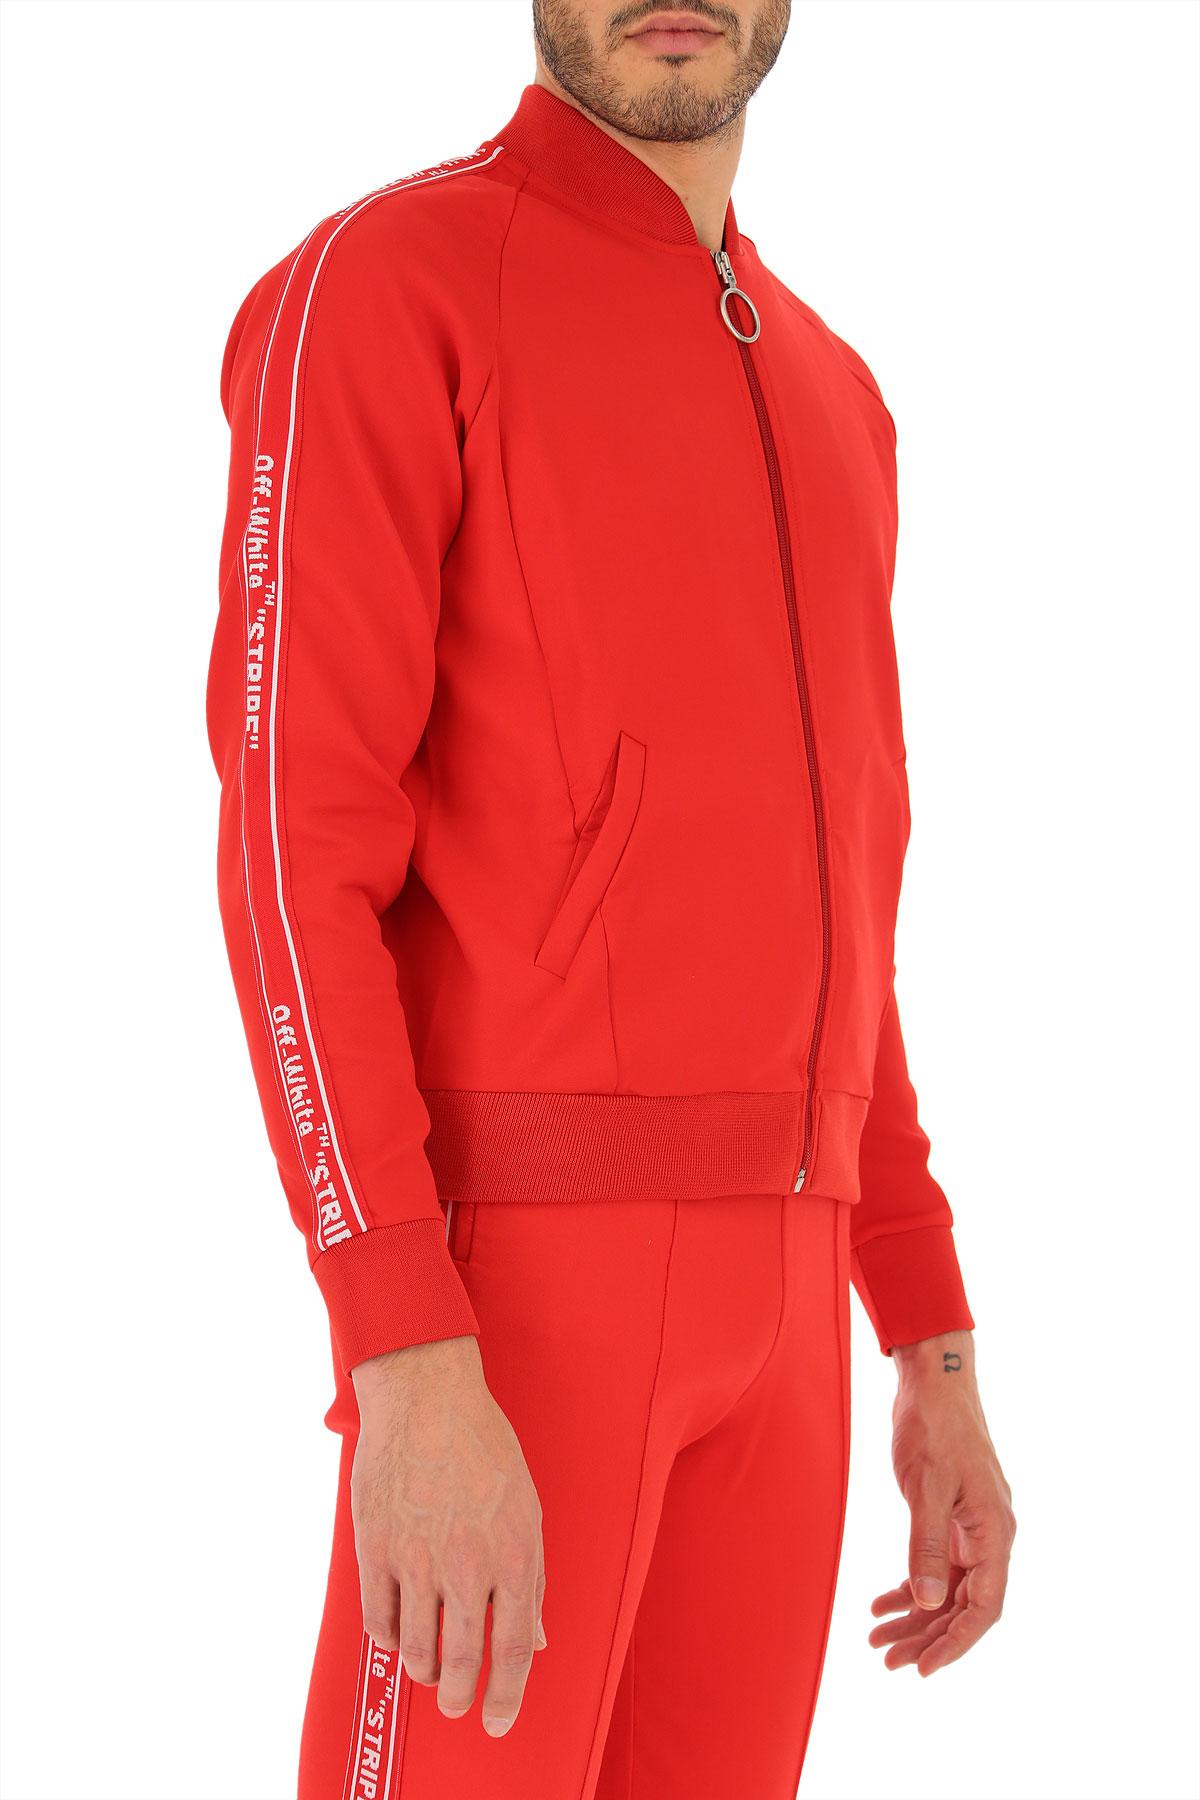 Off-White c/o Virgil Abloh Sweatshirt For Men On Sale in Red for Men - Lyst